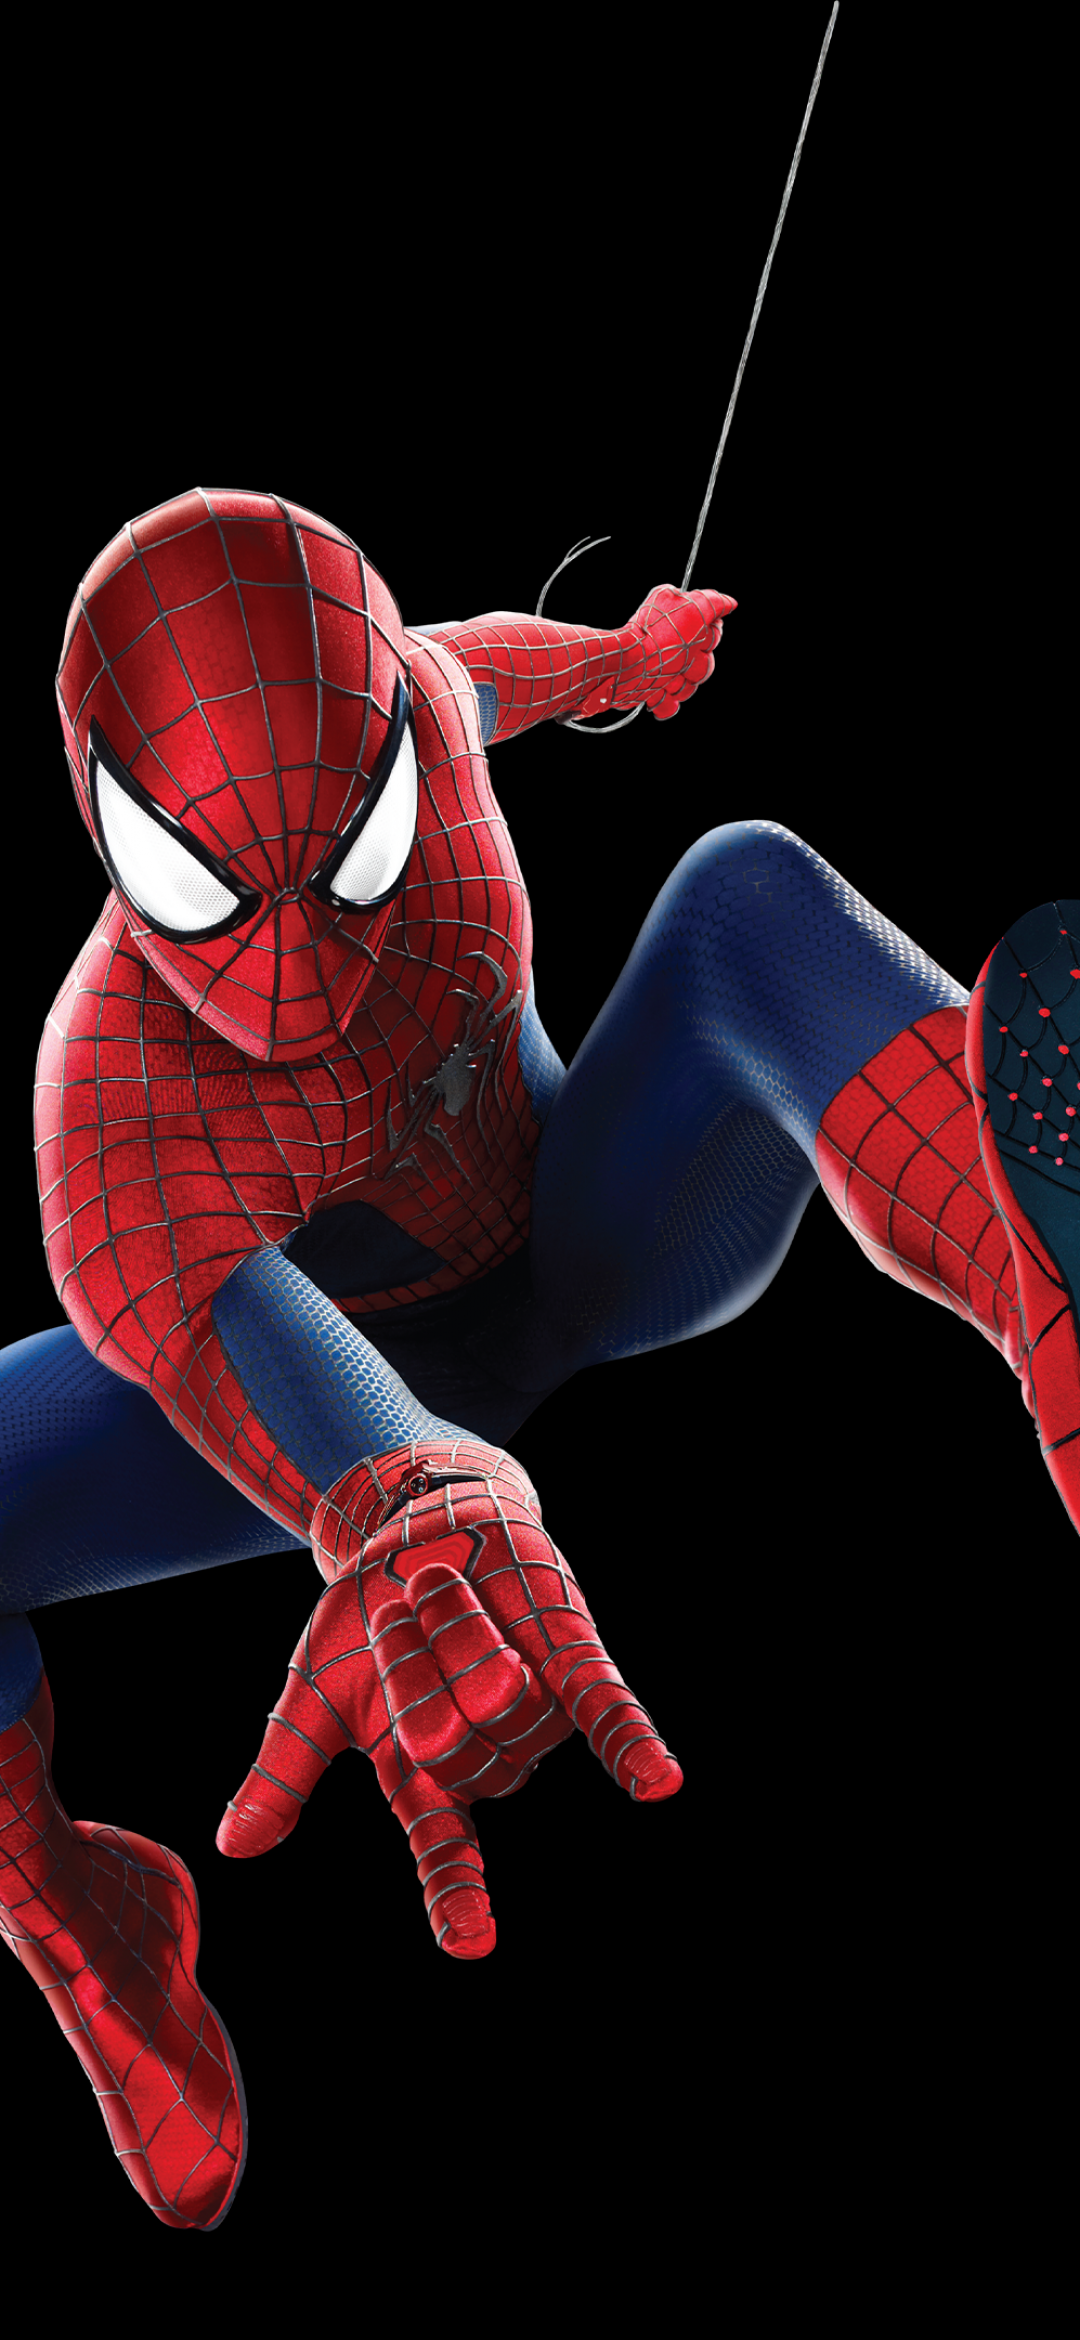 Spider Man Wallpaper 4K, Marvel Superheroes, Black Background, Graphics CGI